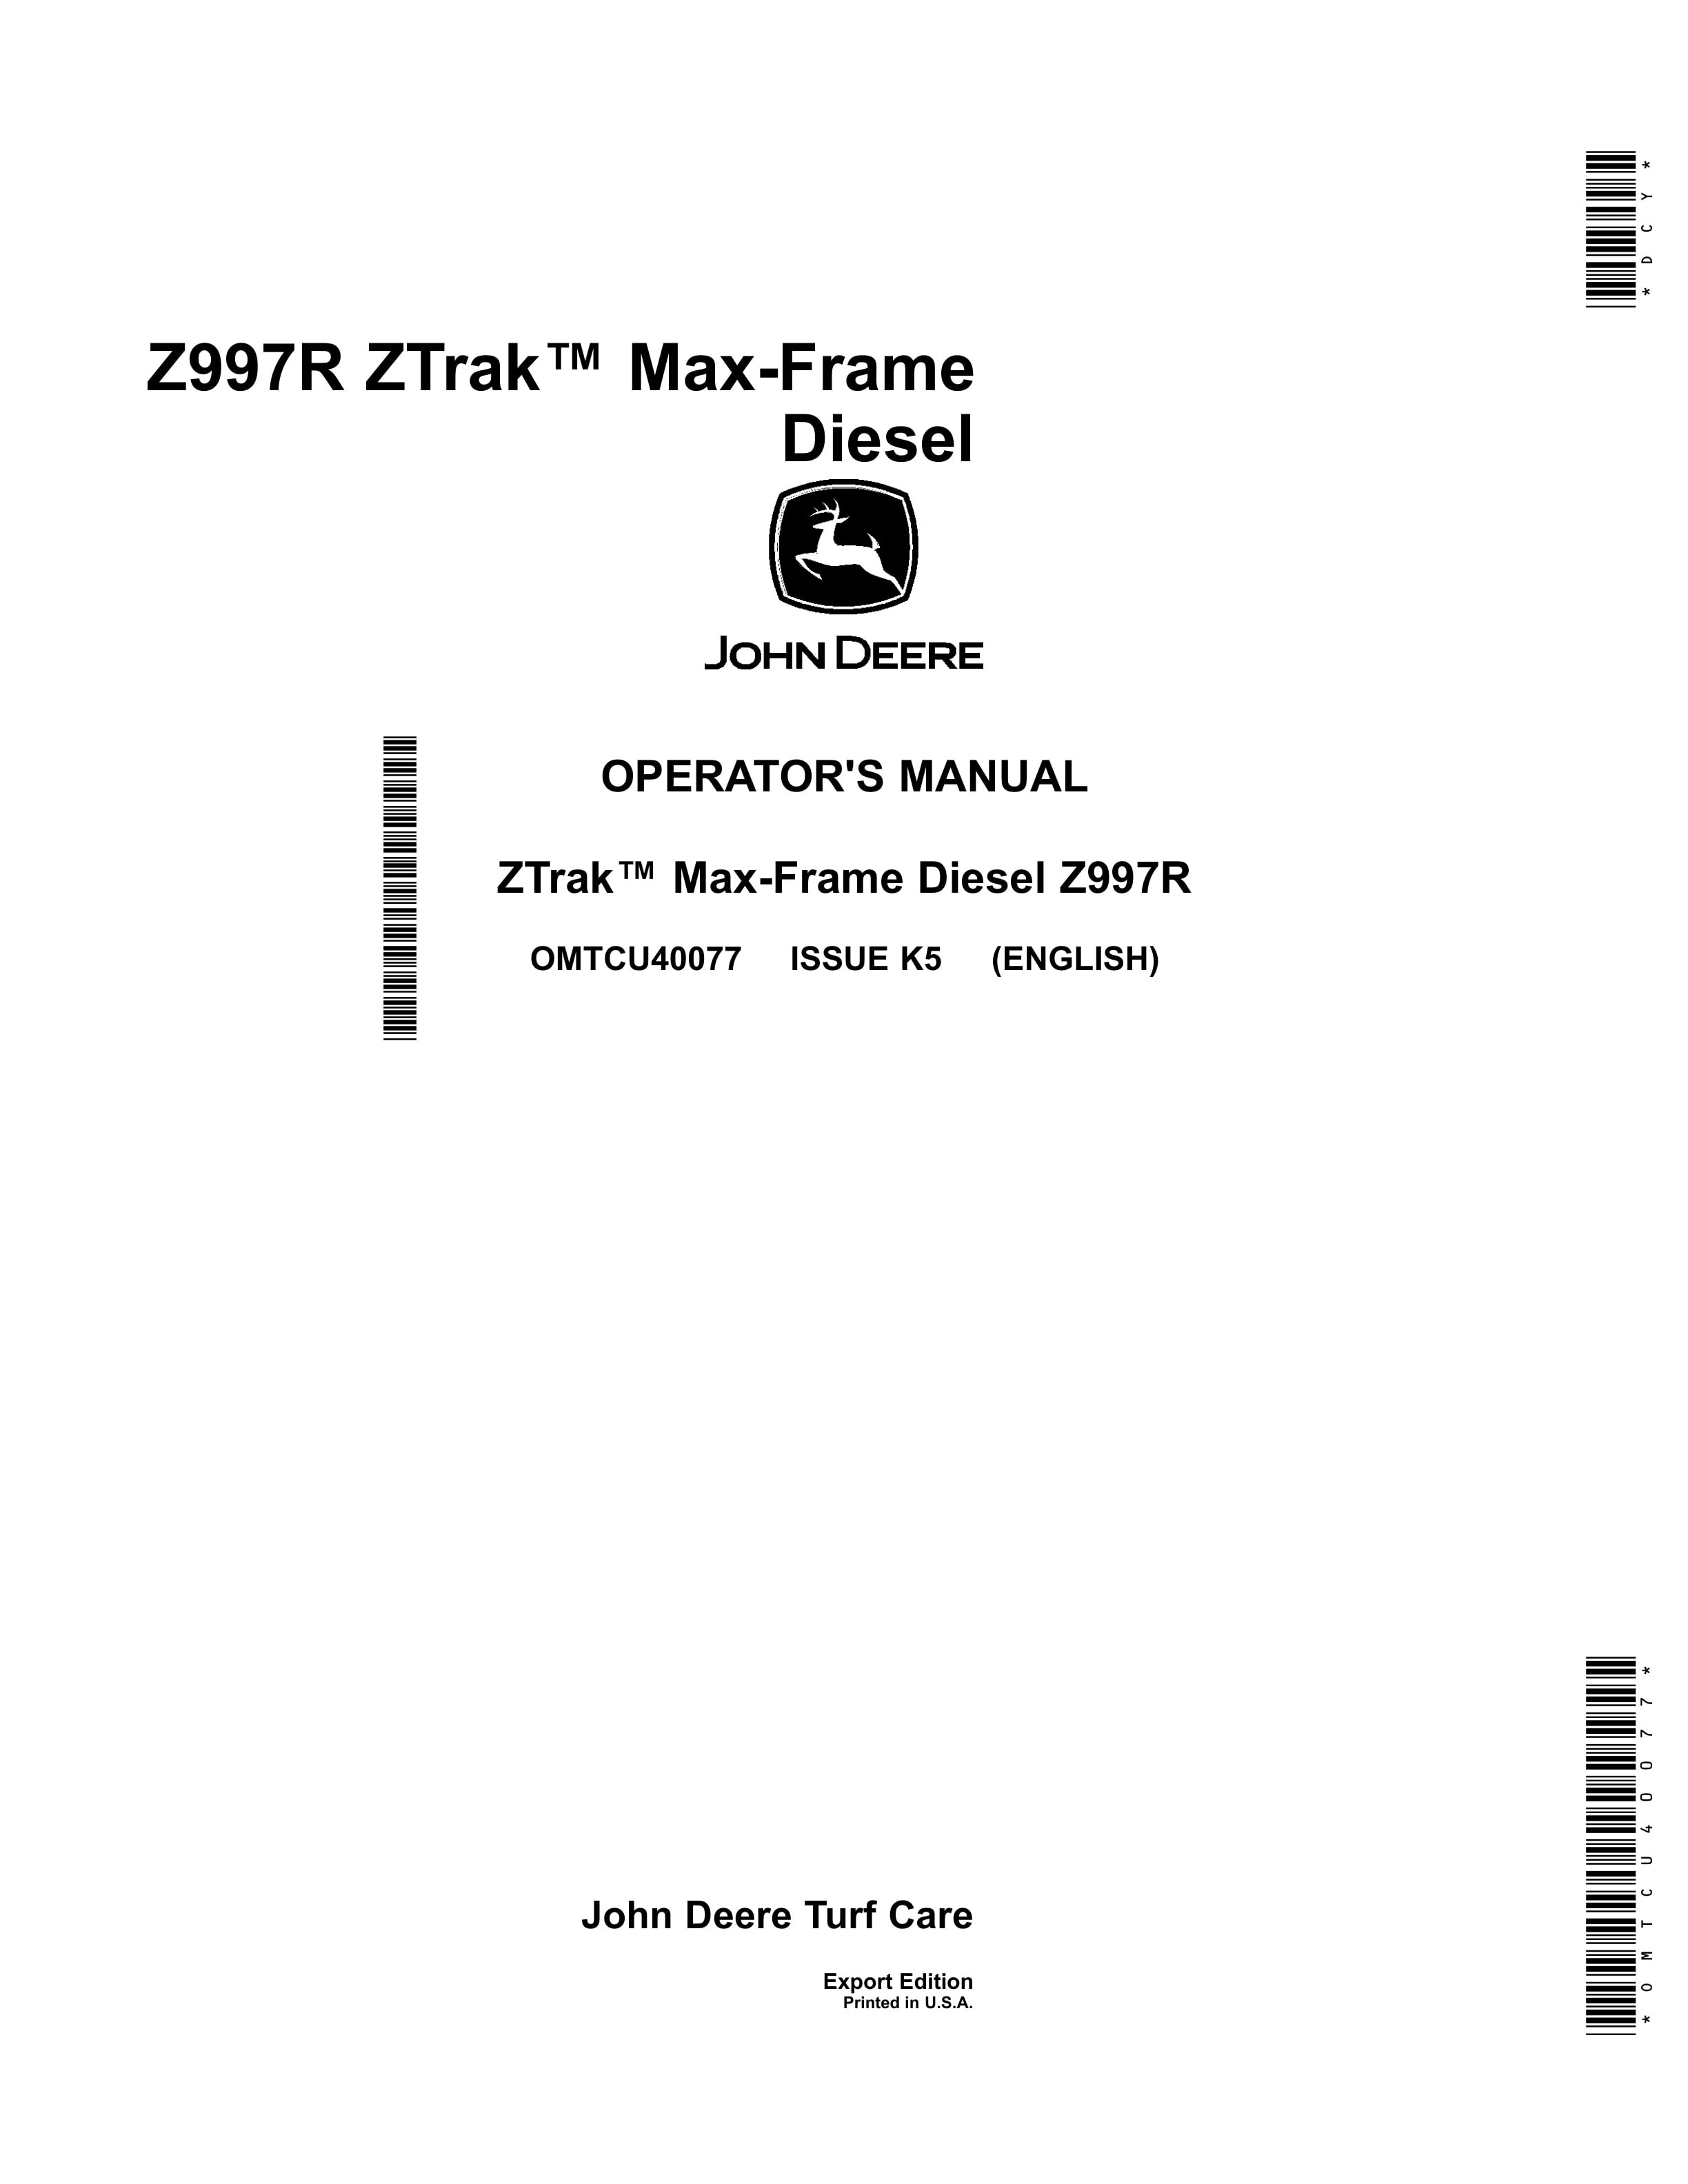 John Deere Z997R ZTrak Max Frame Diesel Operator Manual OMTCU40077 1